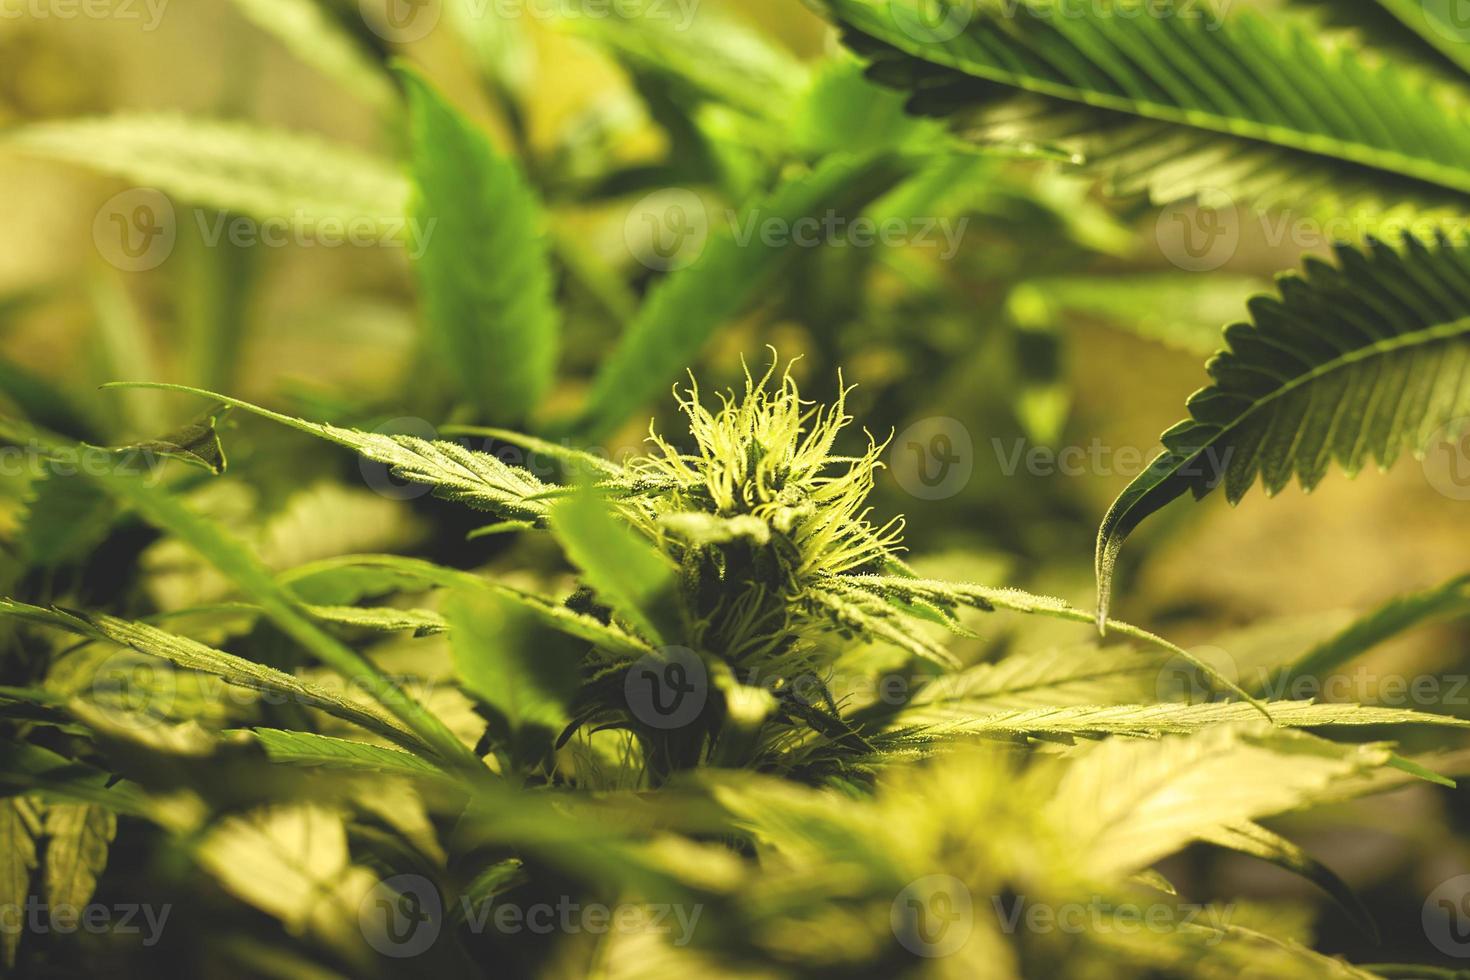 binnenshuis groene cannabistoppen kweken, medicinale marihuana kweken foto